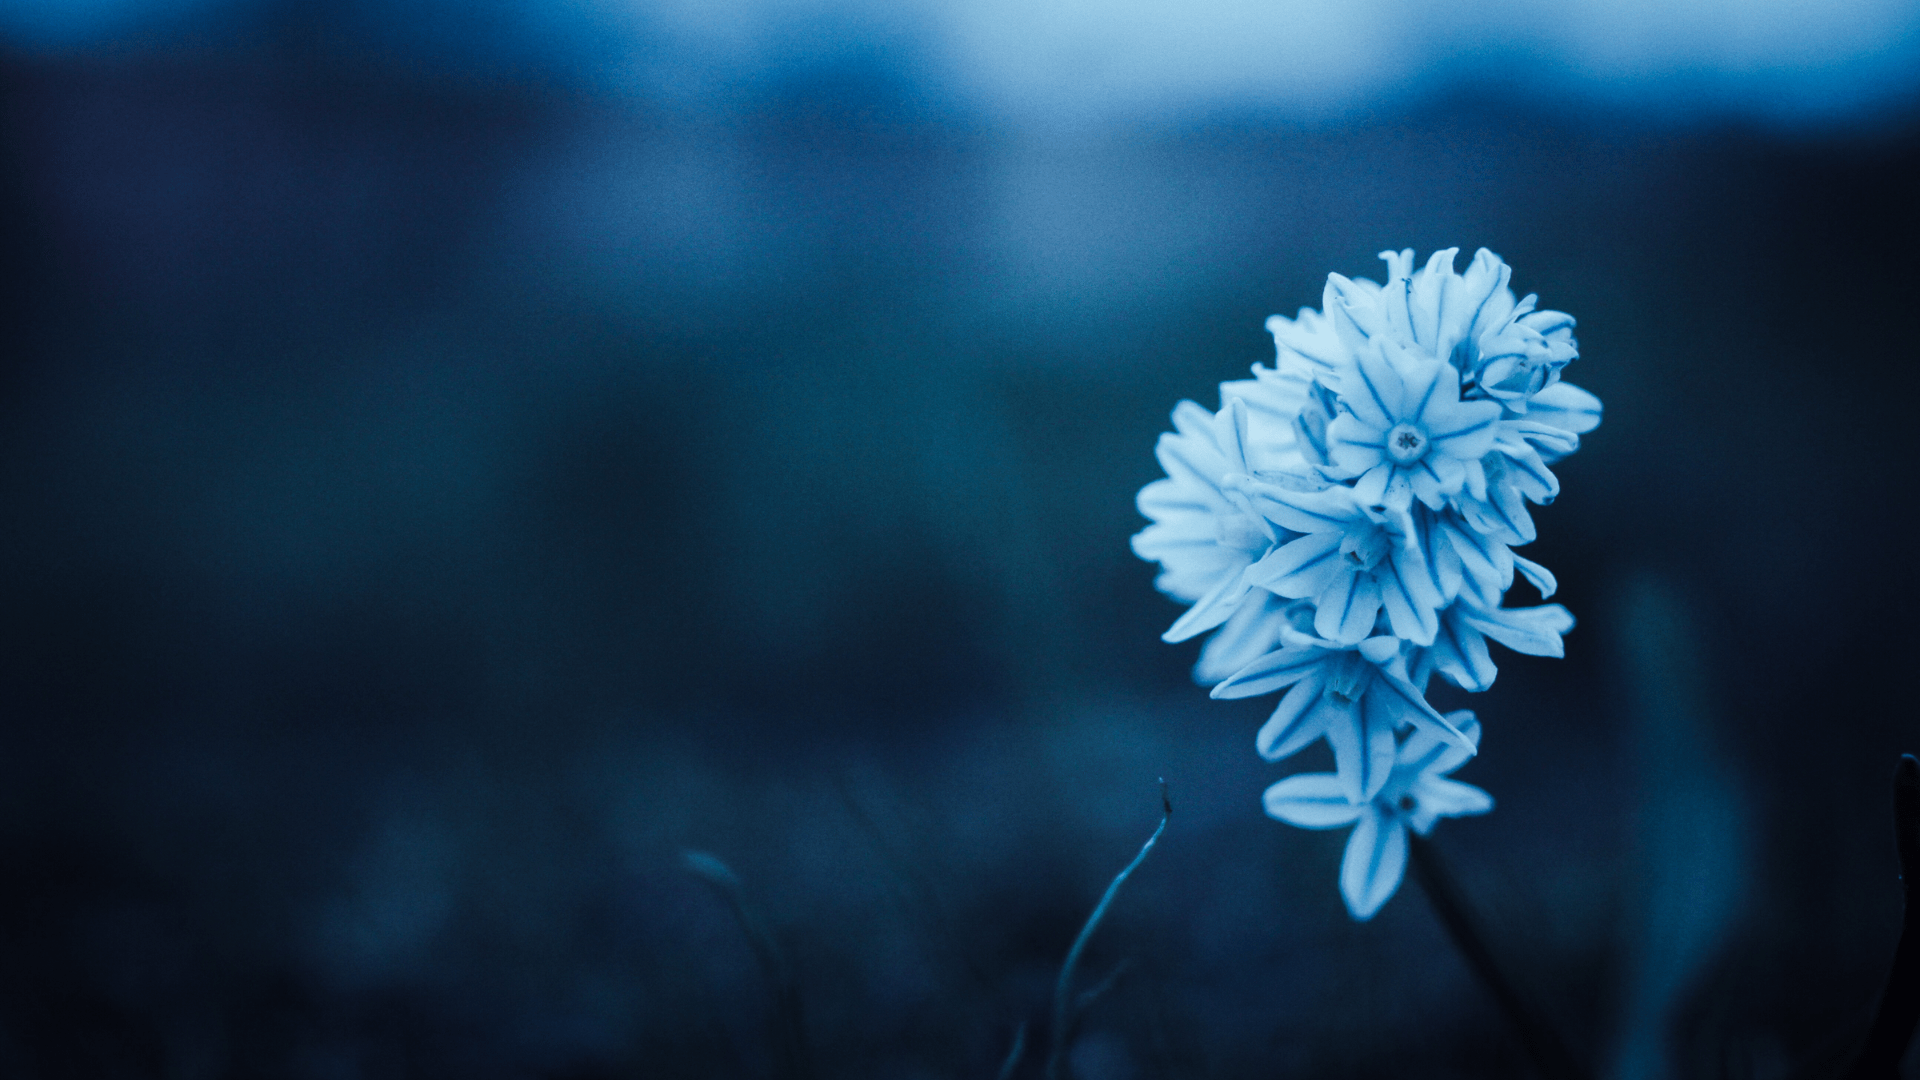 A close up of a blue flower in a field - Dark blue, navy blue